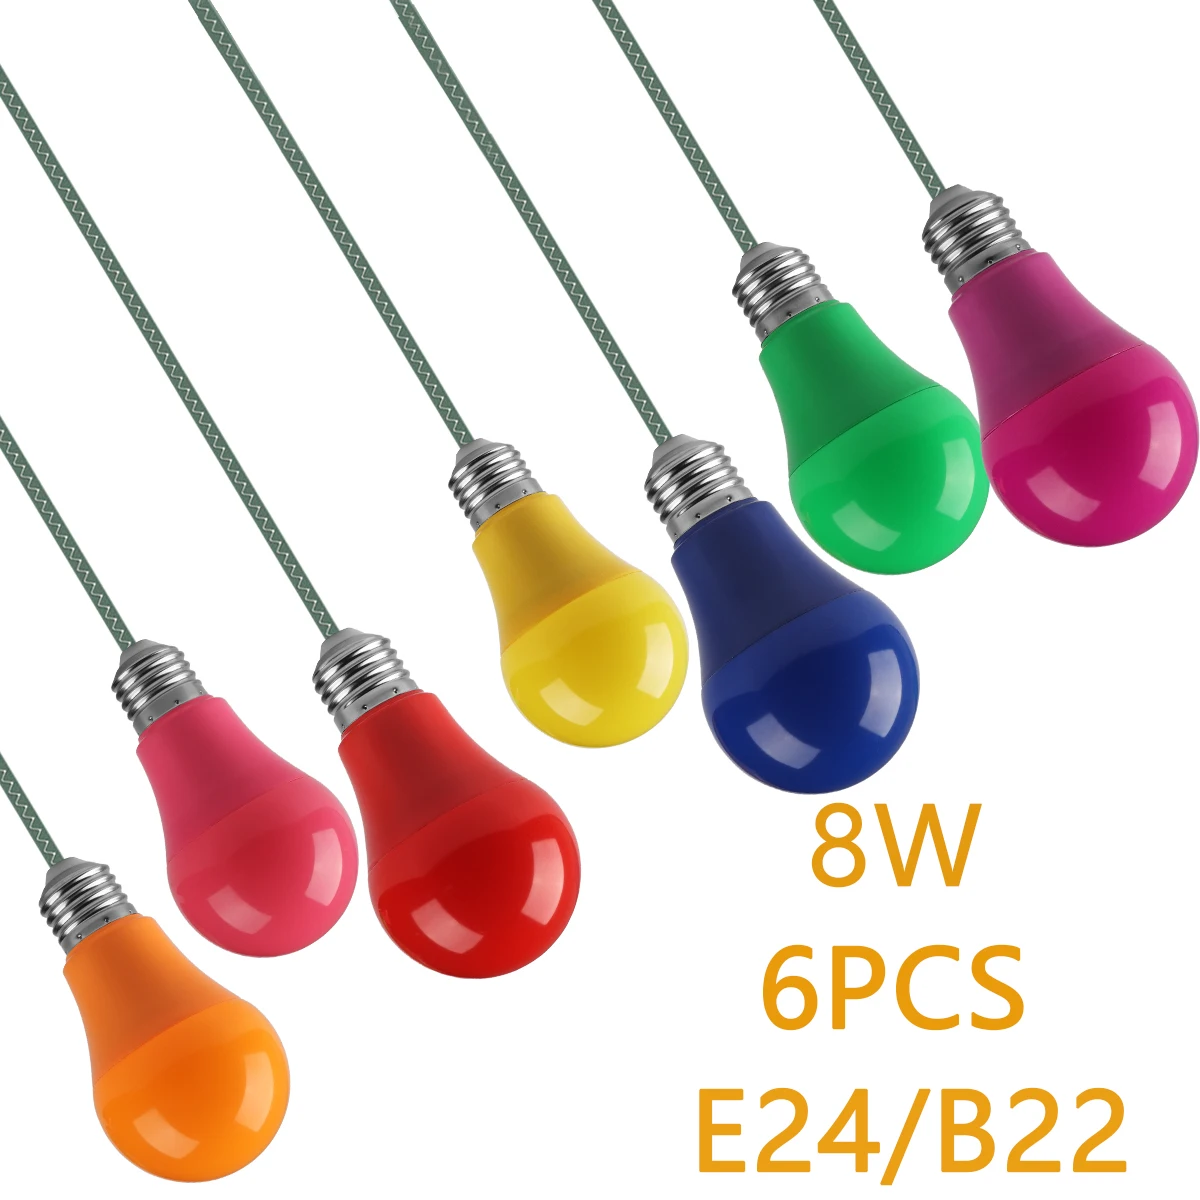 6PCS/LOT LED energy-saving color bulbs Christmas decoration marquee night light E27 AC110V 220V 8W no flicker 7 colors